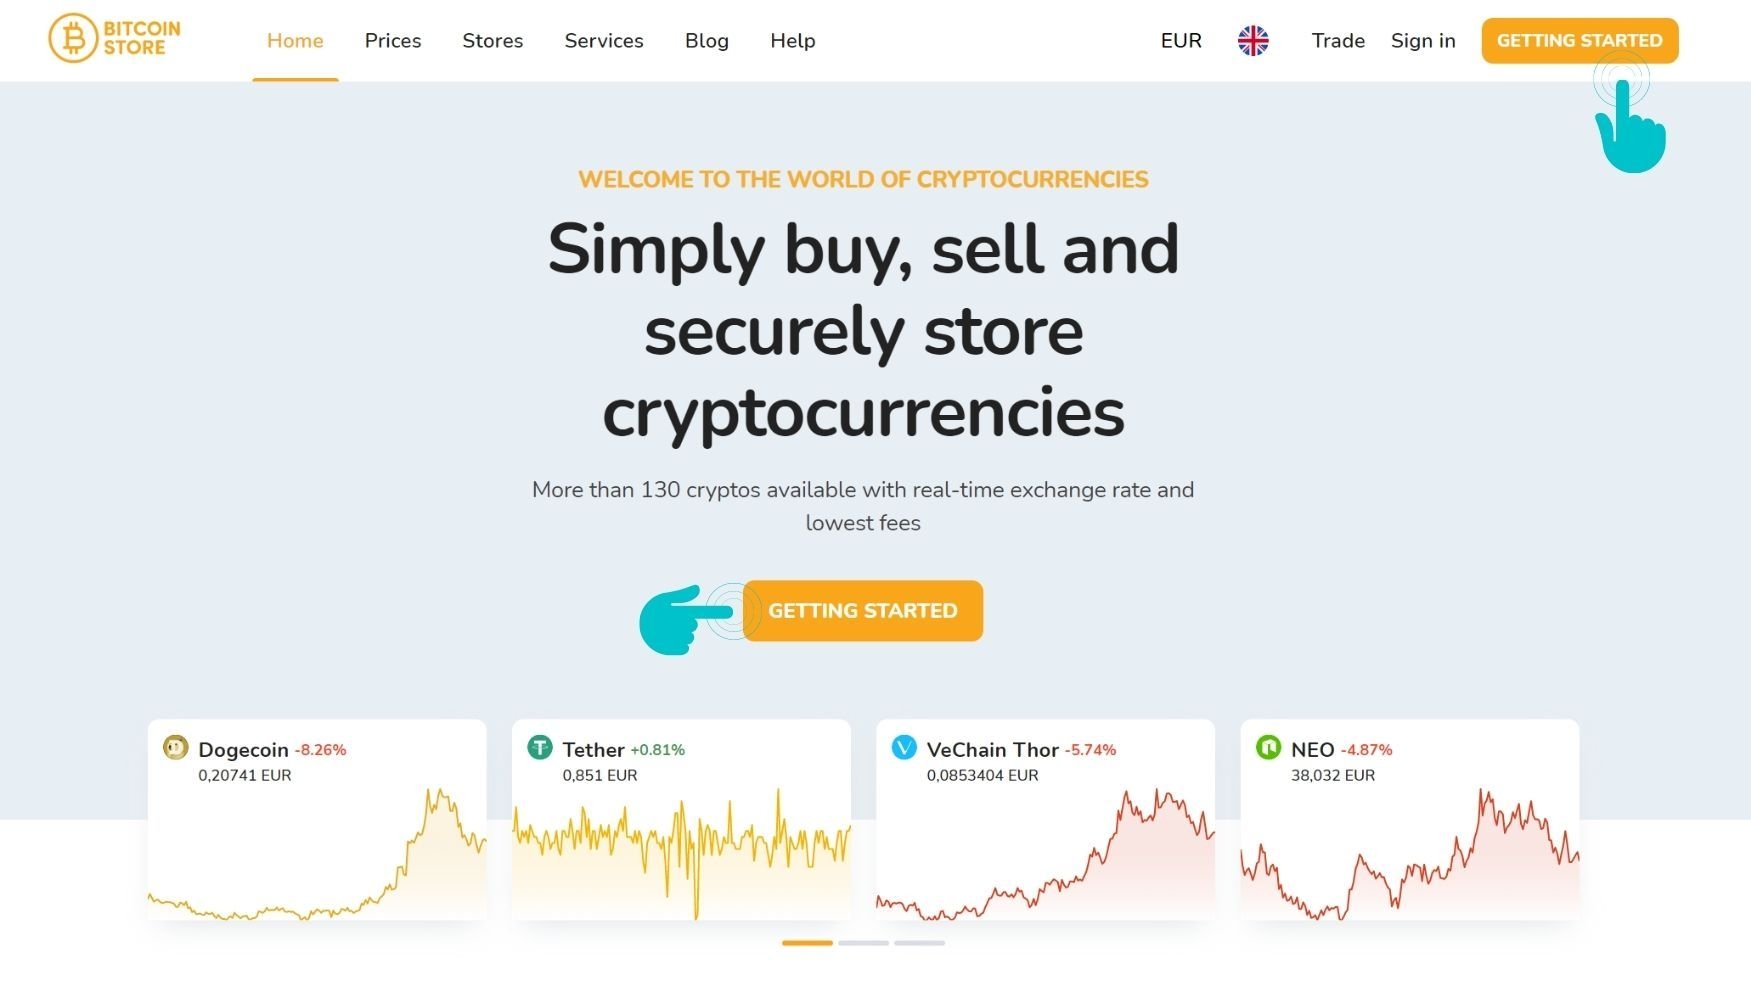 The Bitcoin Store home page desktop screenshot.